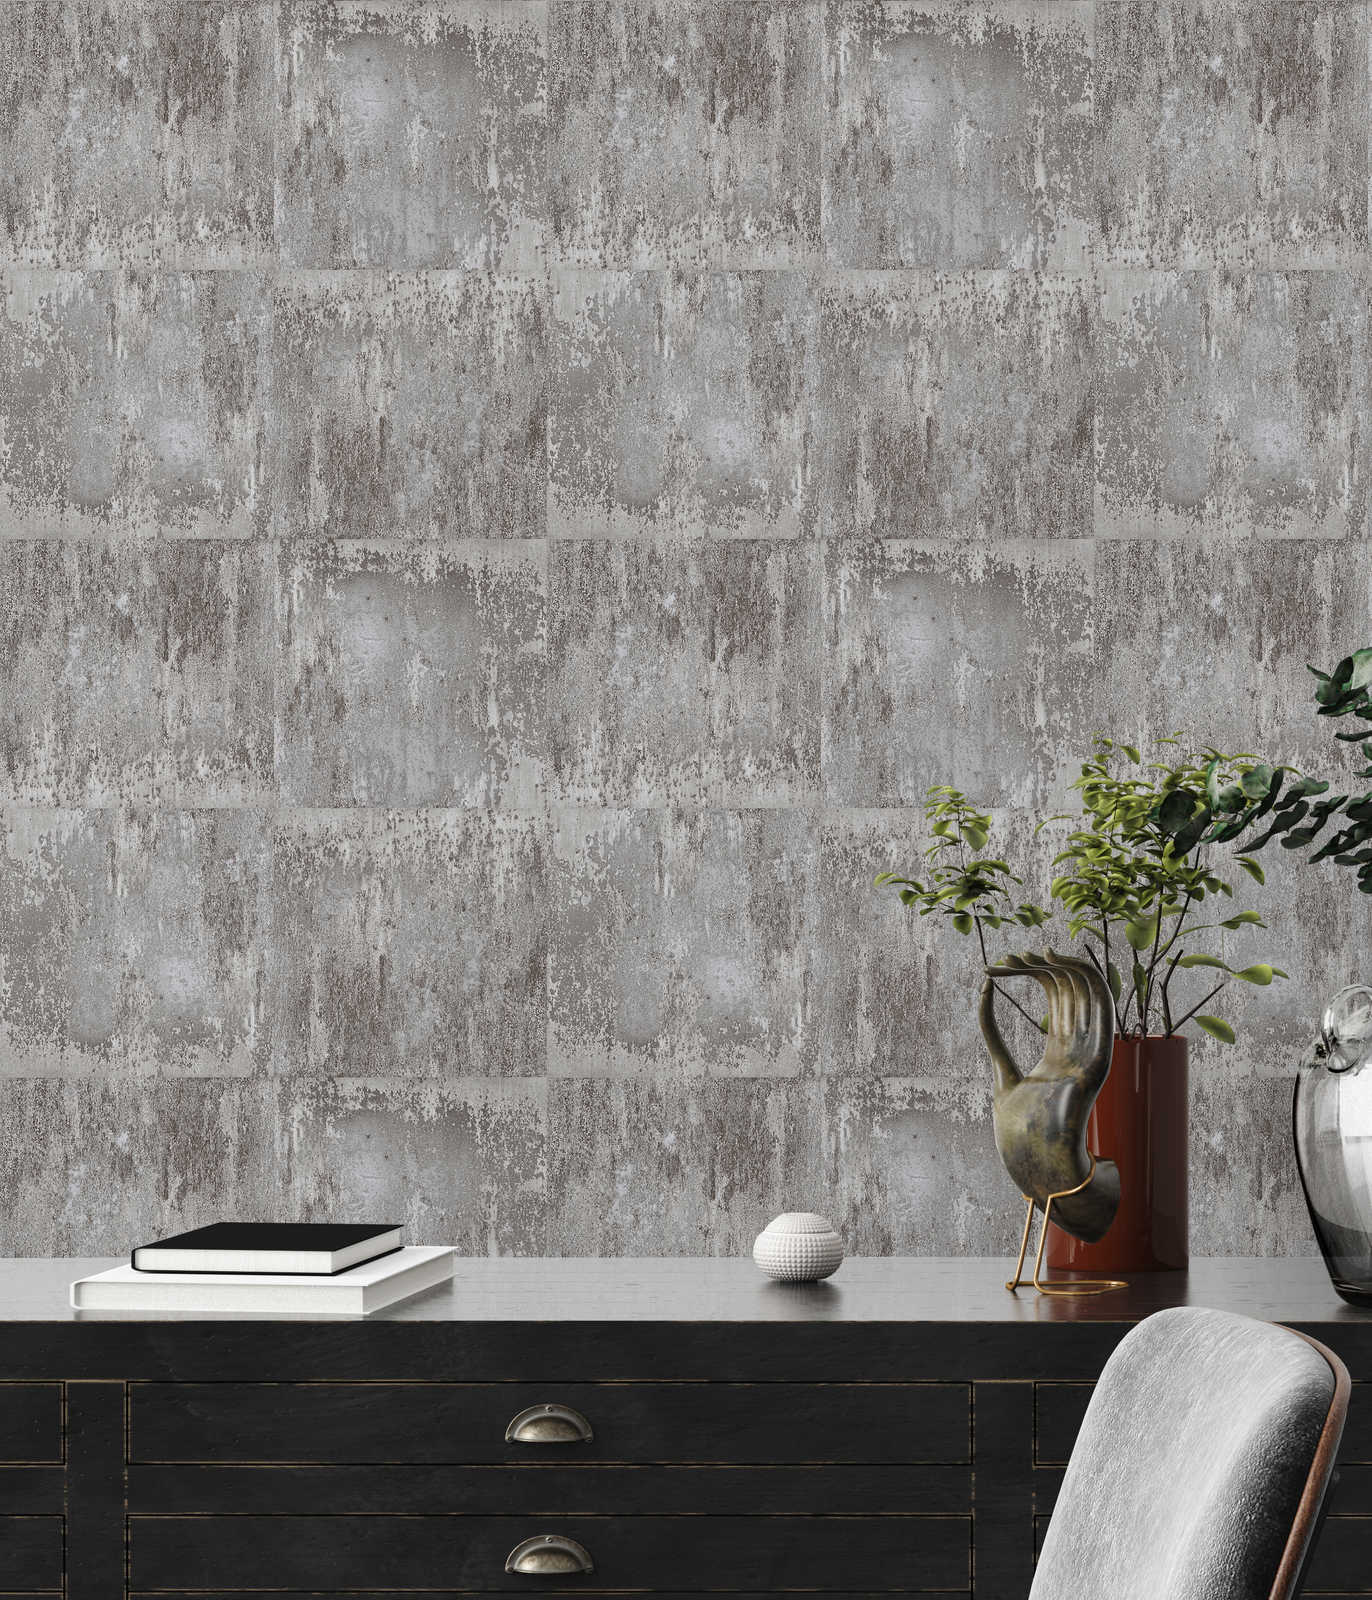             Self-adhesive wallpaper | rust look design with metallic effect - grey
        